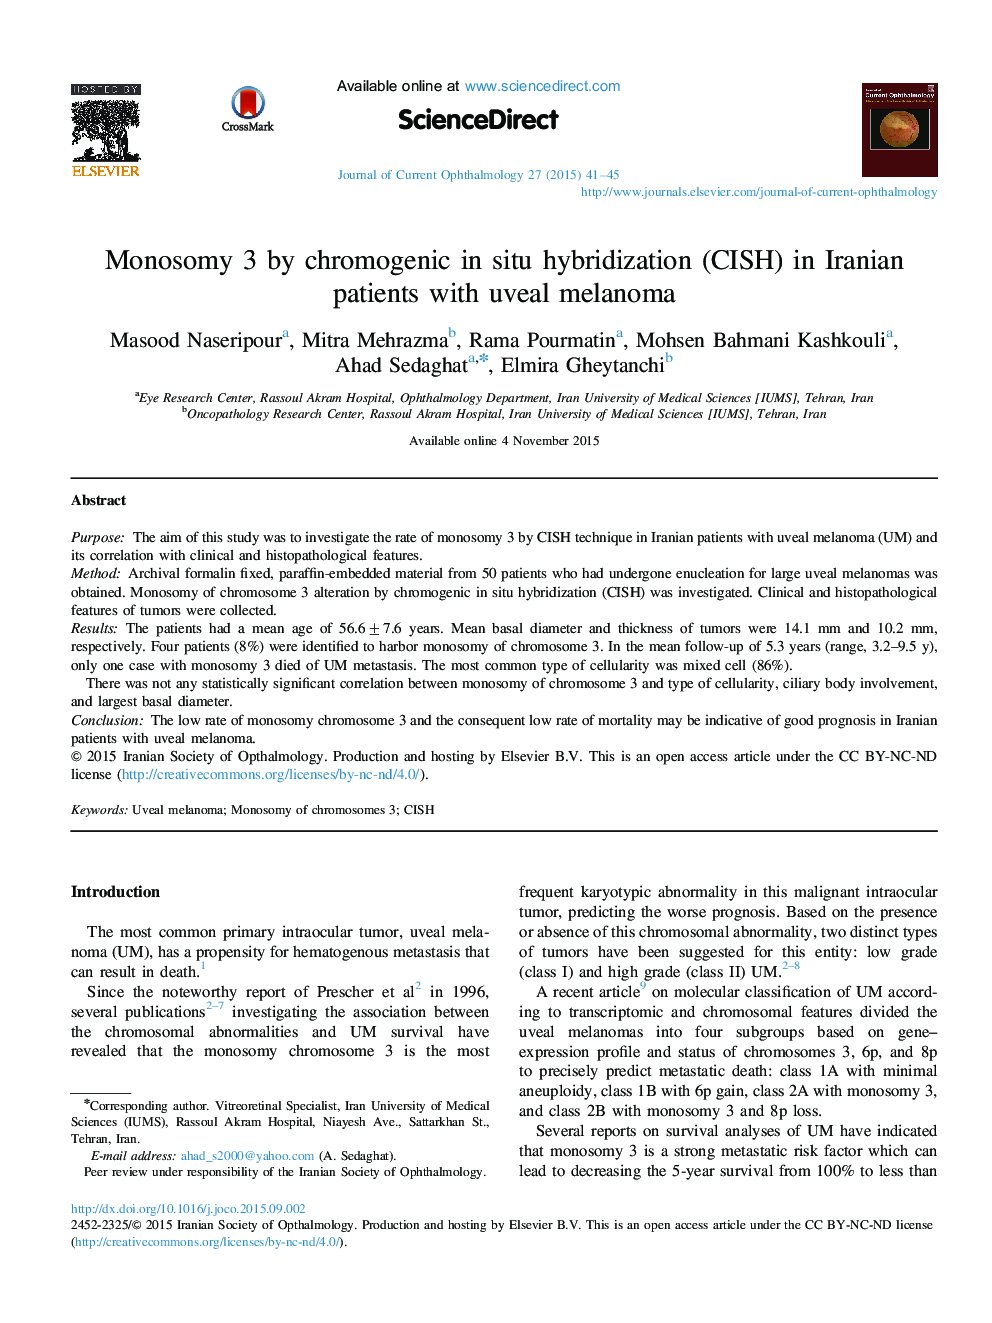 Monosomy 3 by chromogenic in situ hybridization (CISH) in Iranian patients with uveal melanoma 